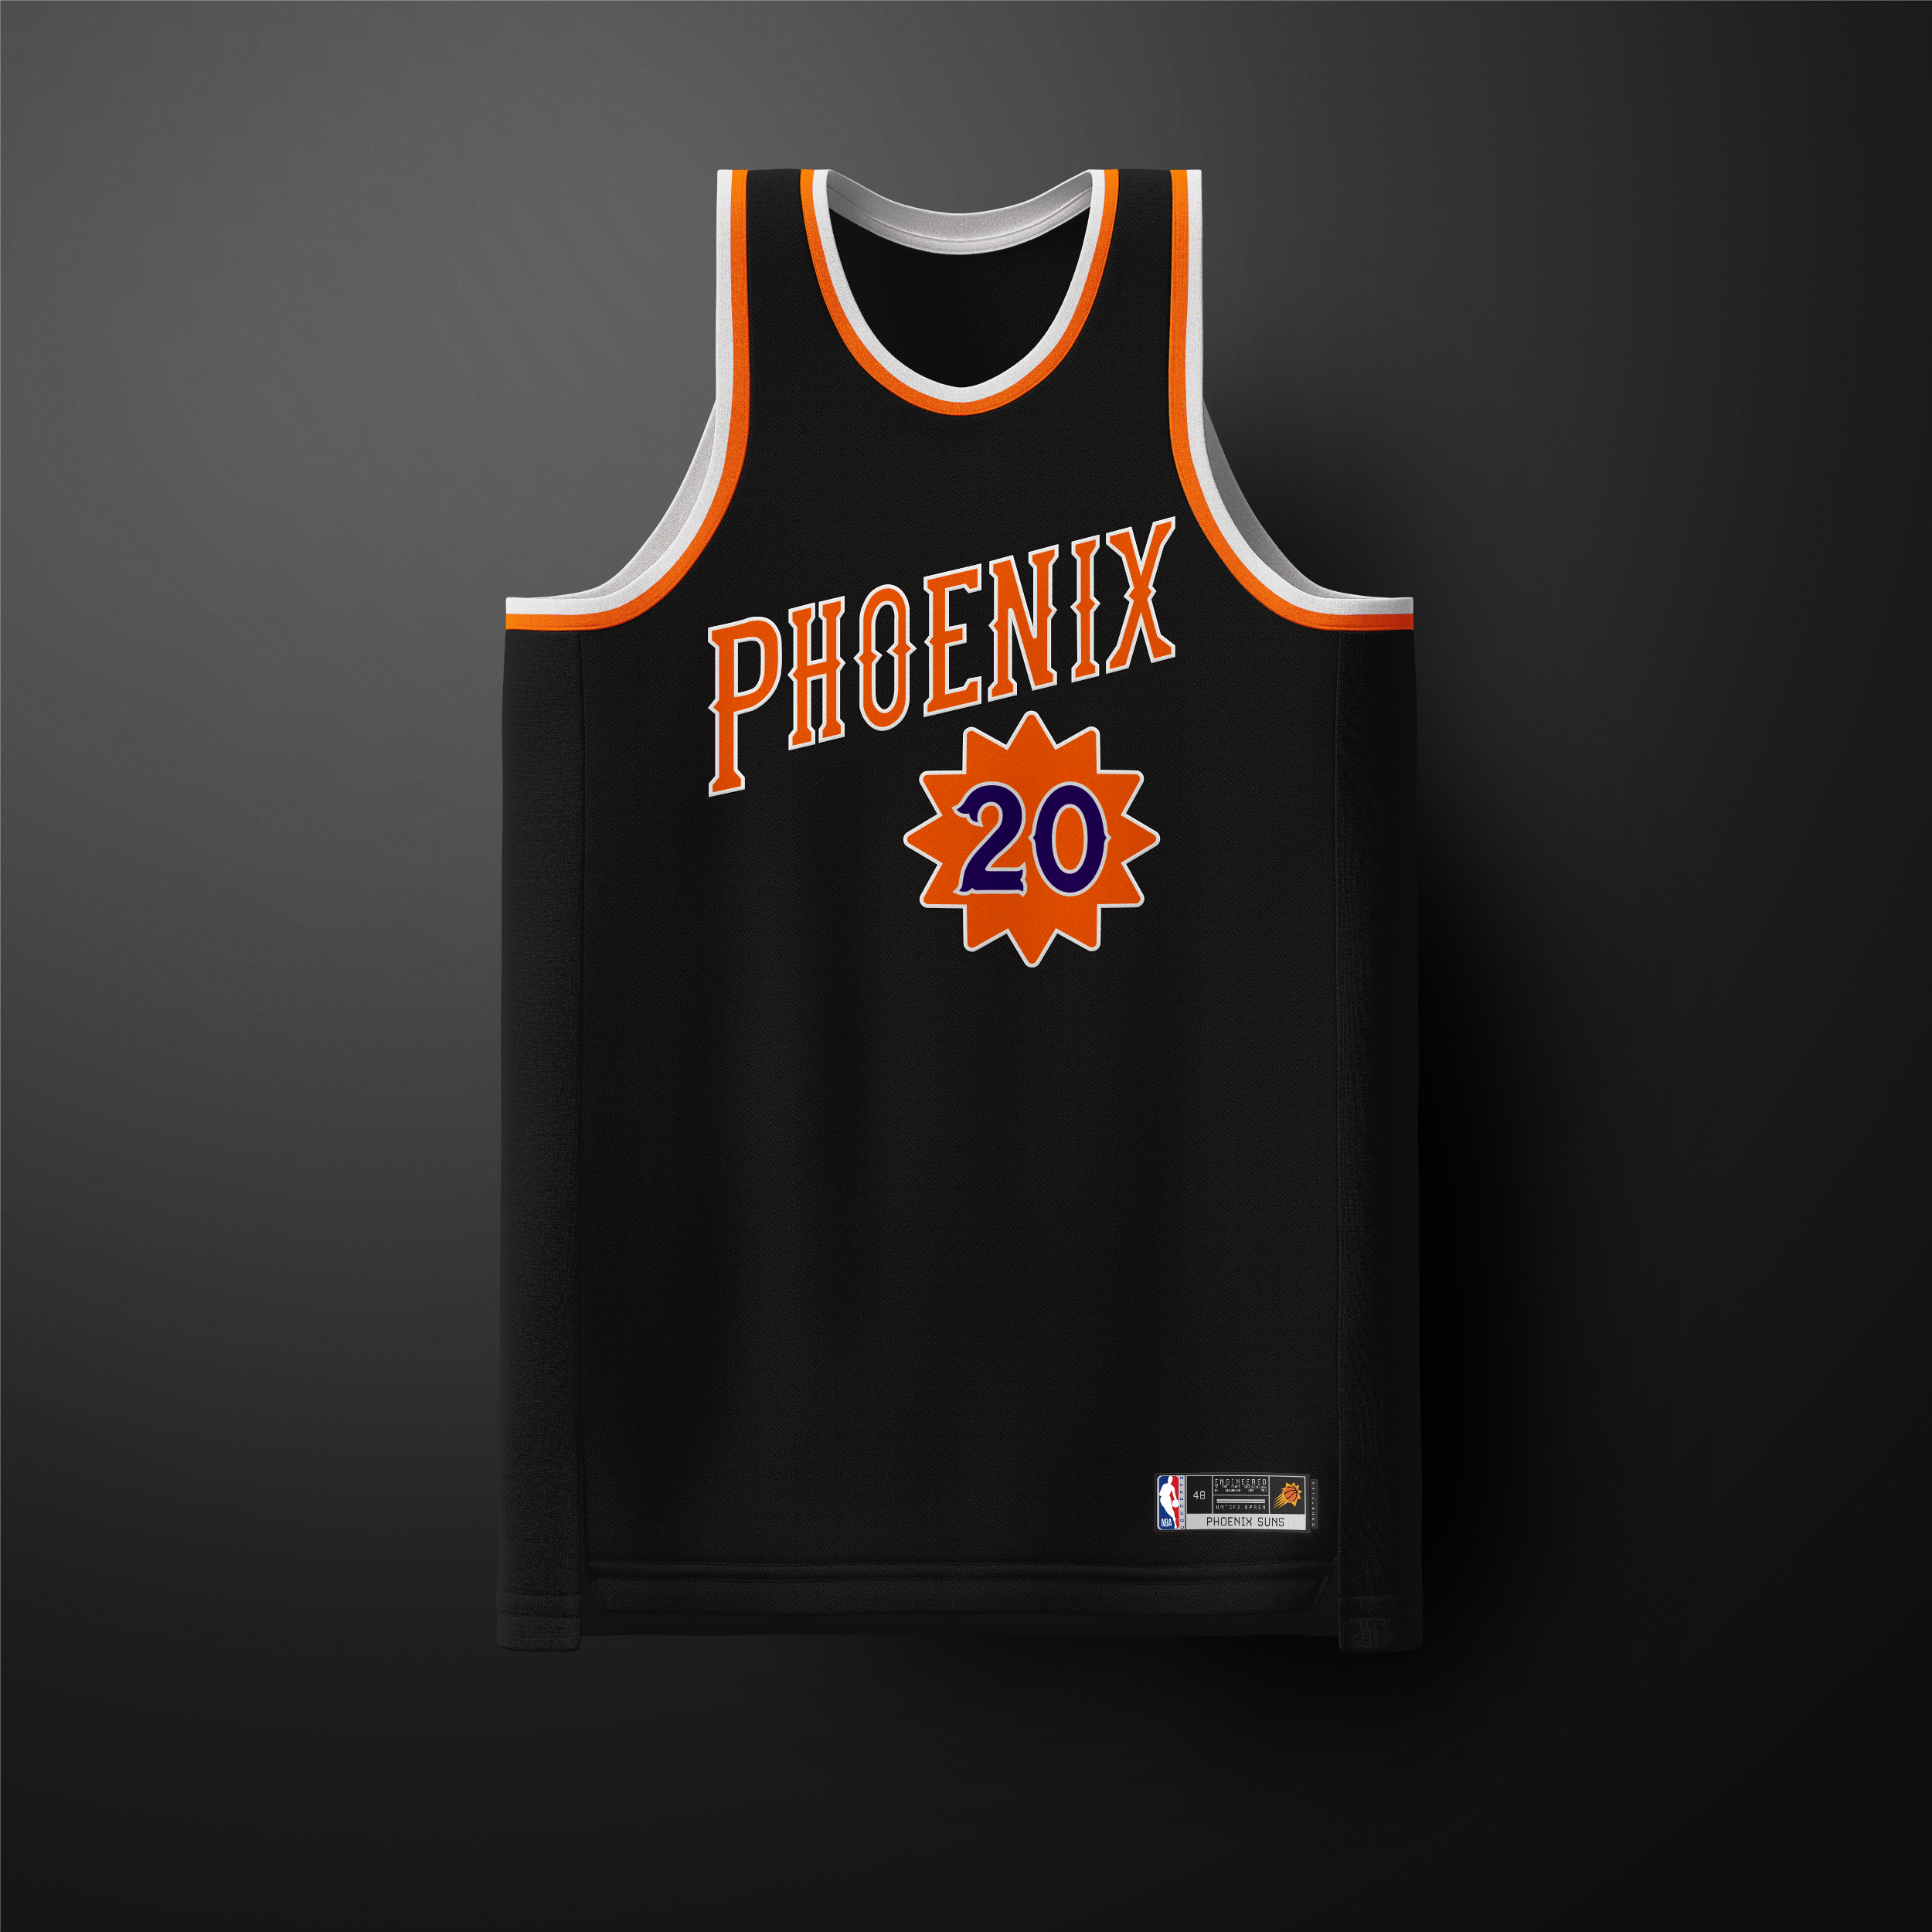 According to @SunsUniTracker, the Suns will have 3 new uniforms